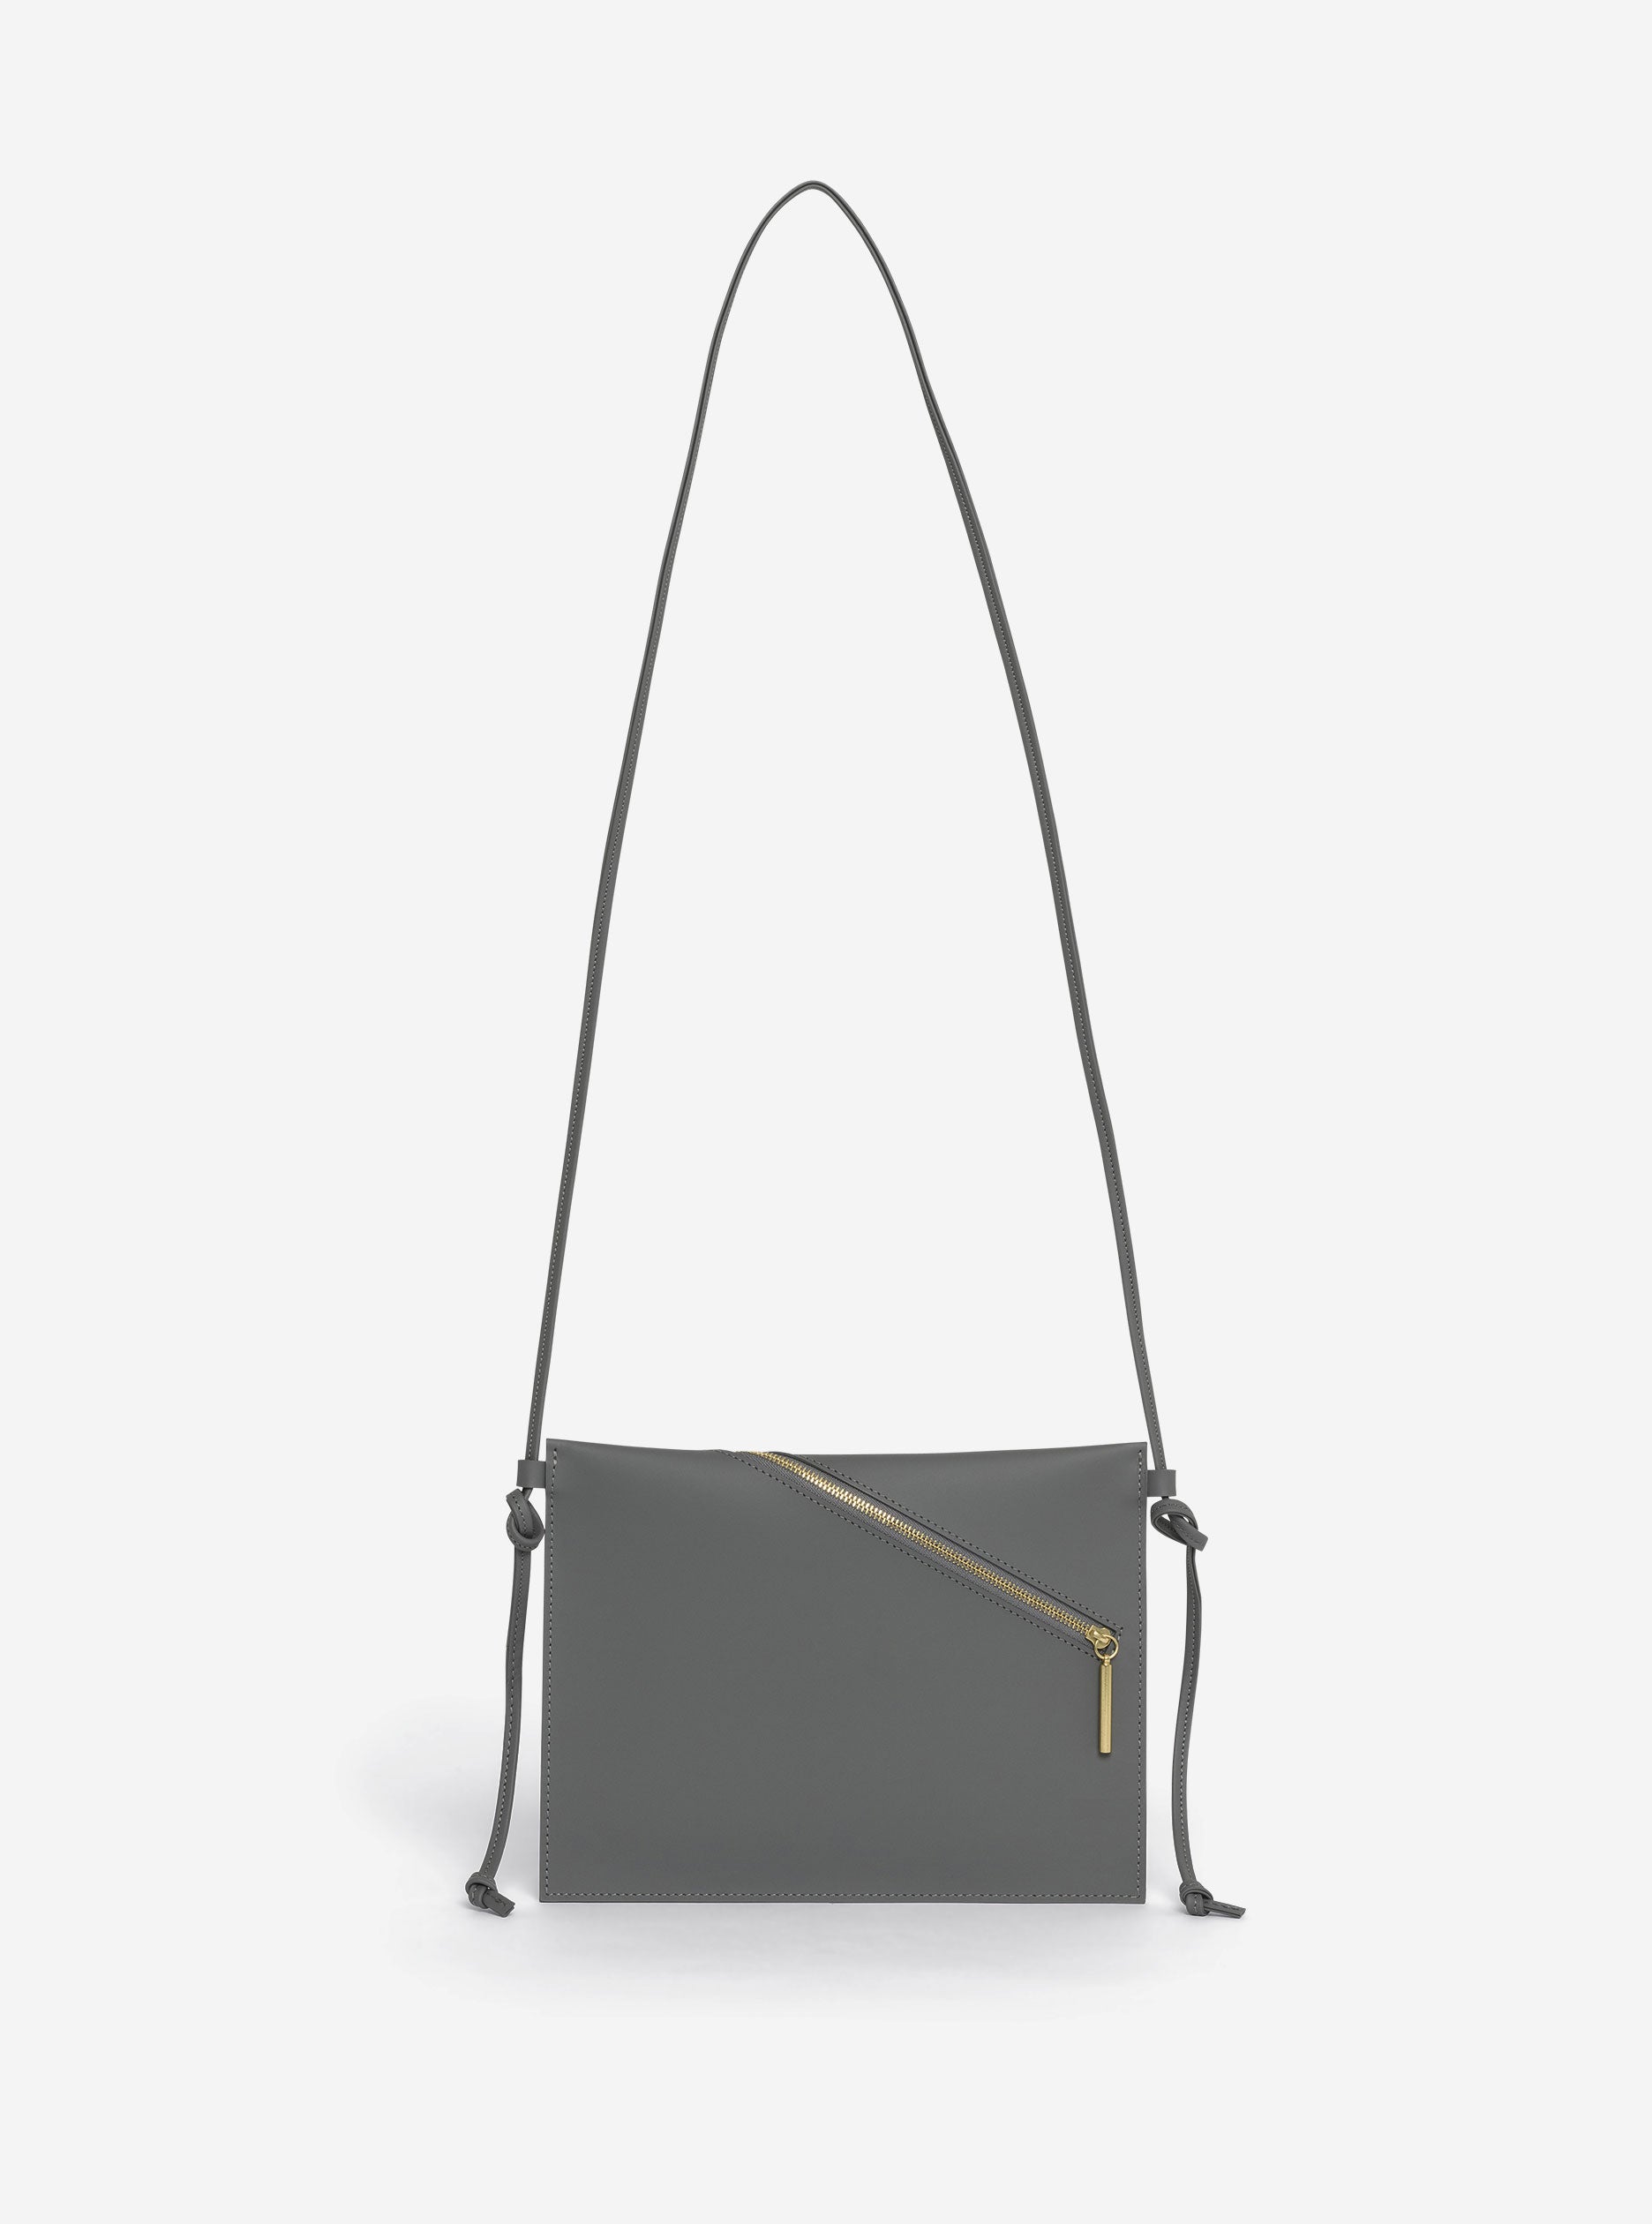 Shoulder and Crossbody bag AB 112 in grey. The reinterpretation of japenese Sacoche.